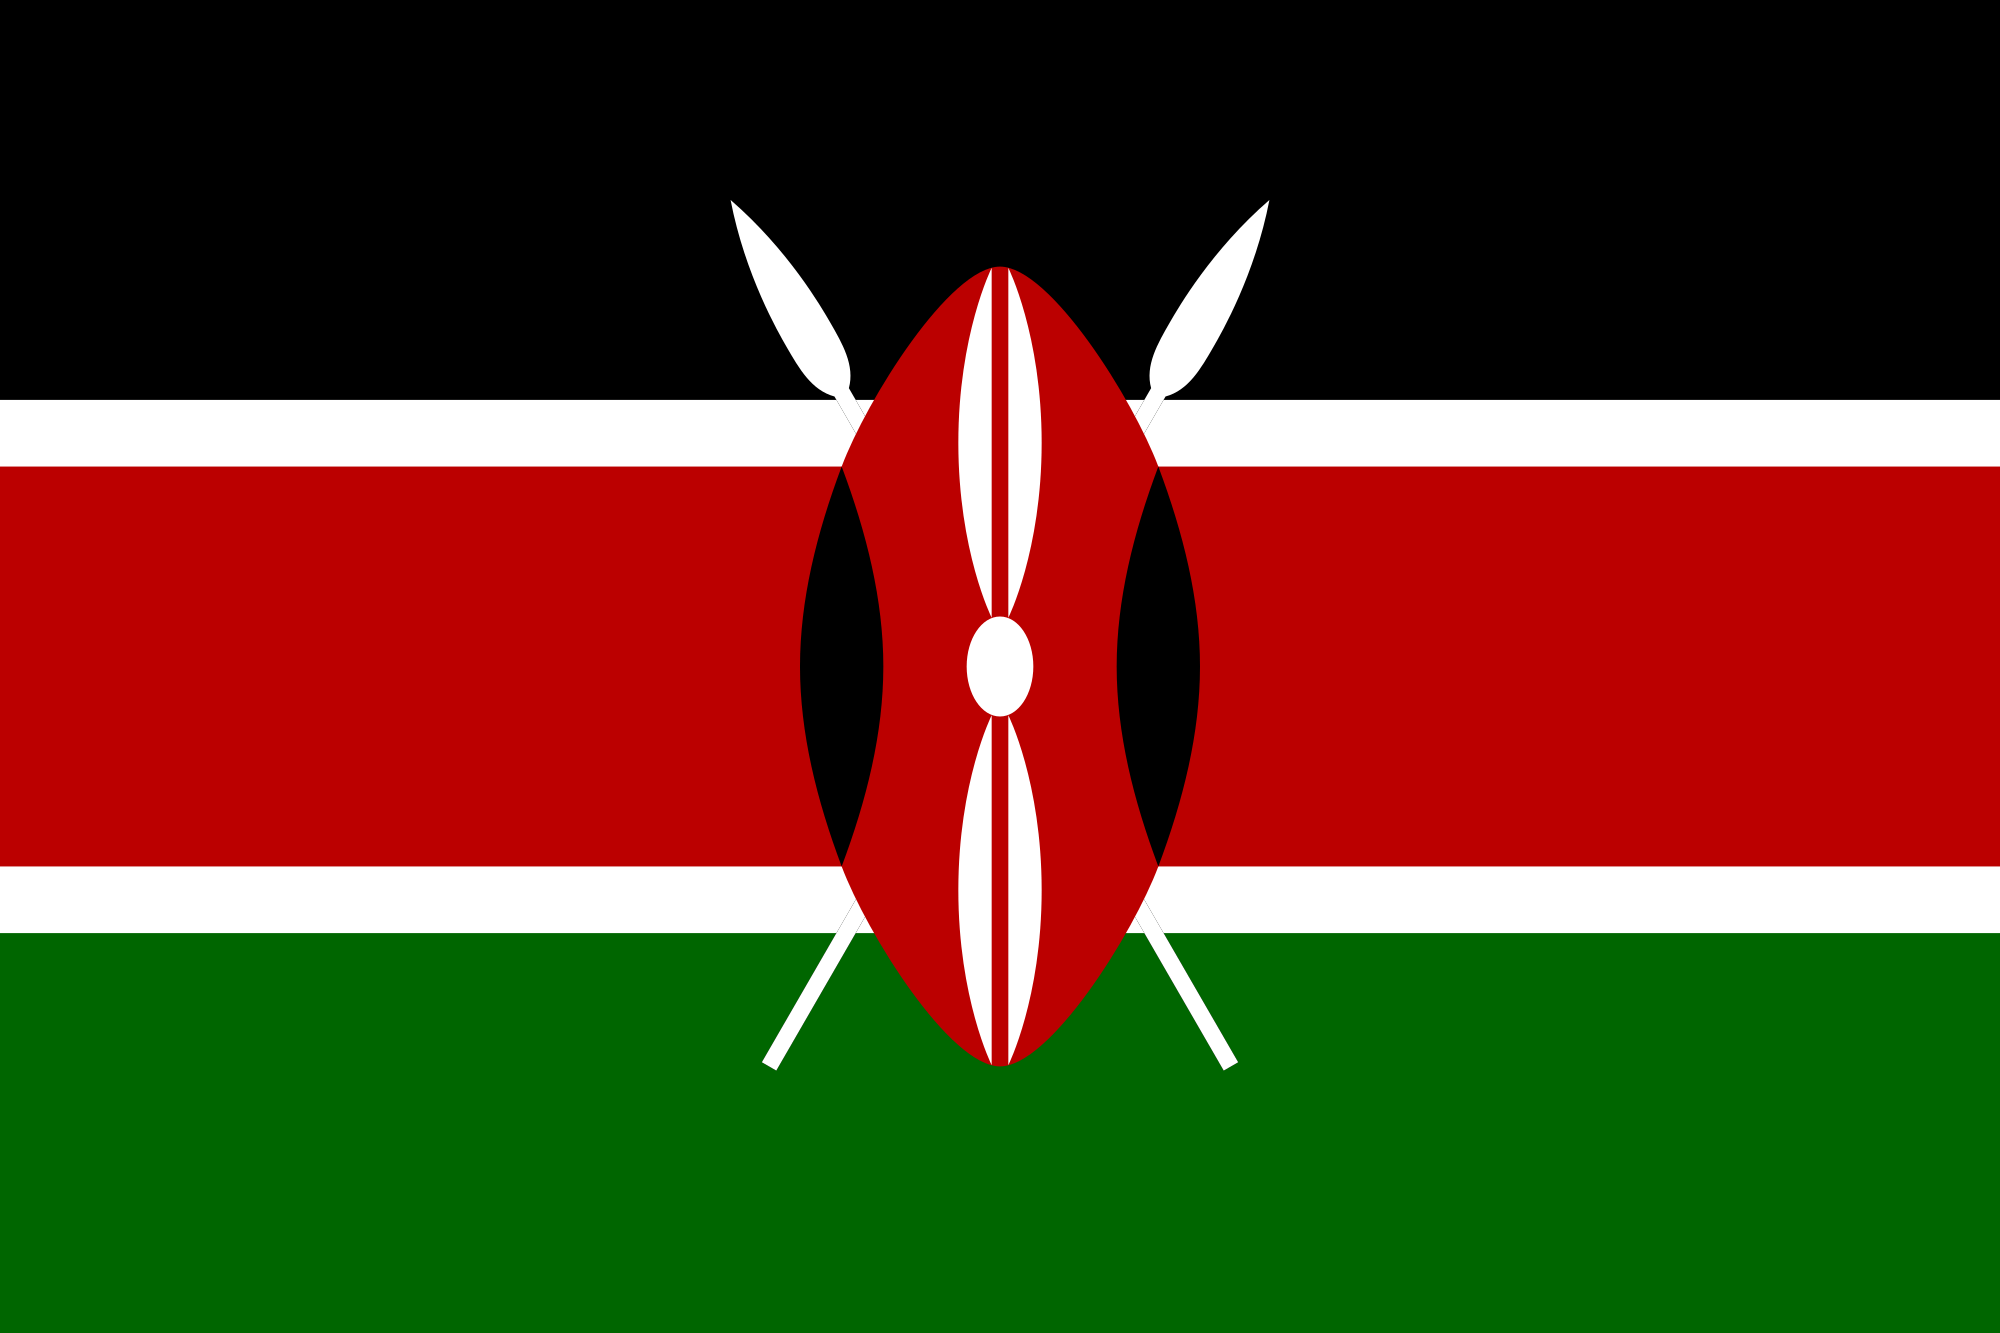 Red and Black Spear Logo - Flag of Kenya